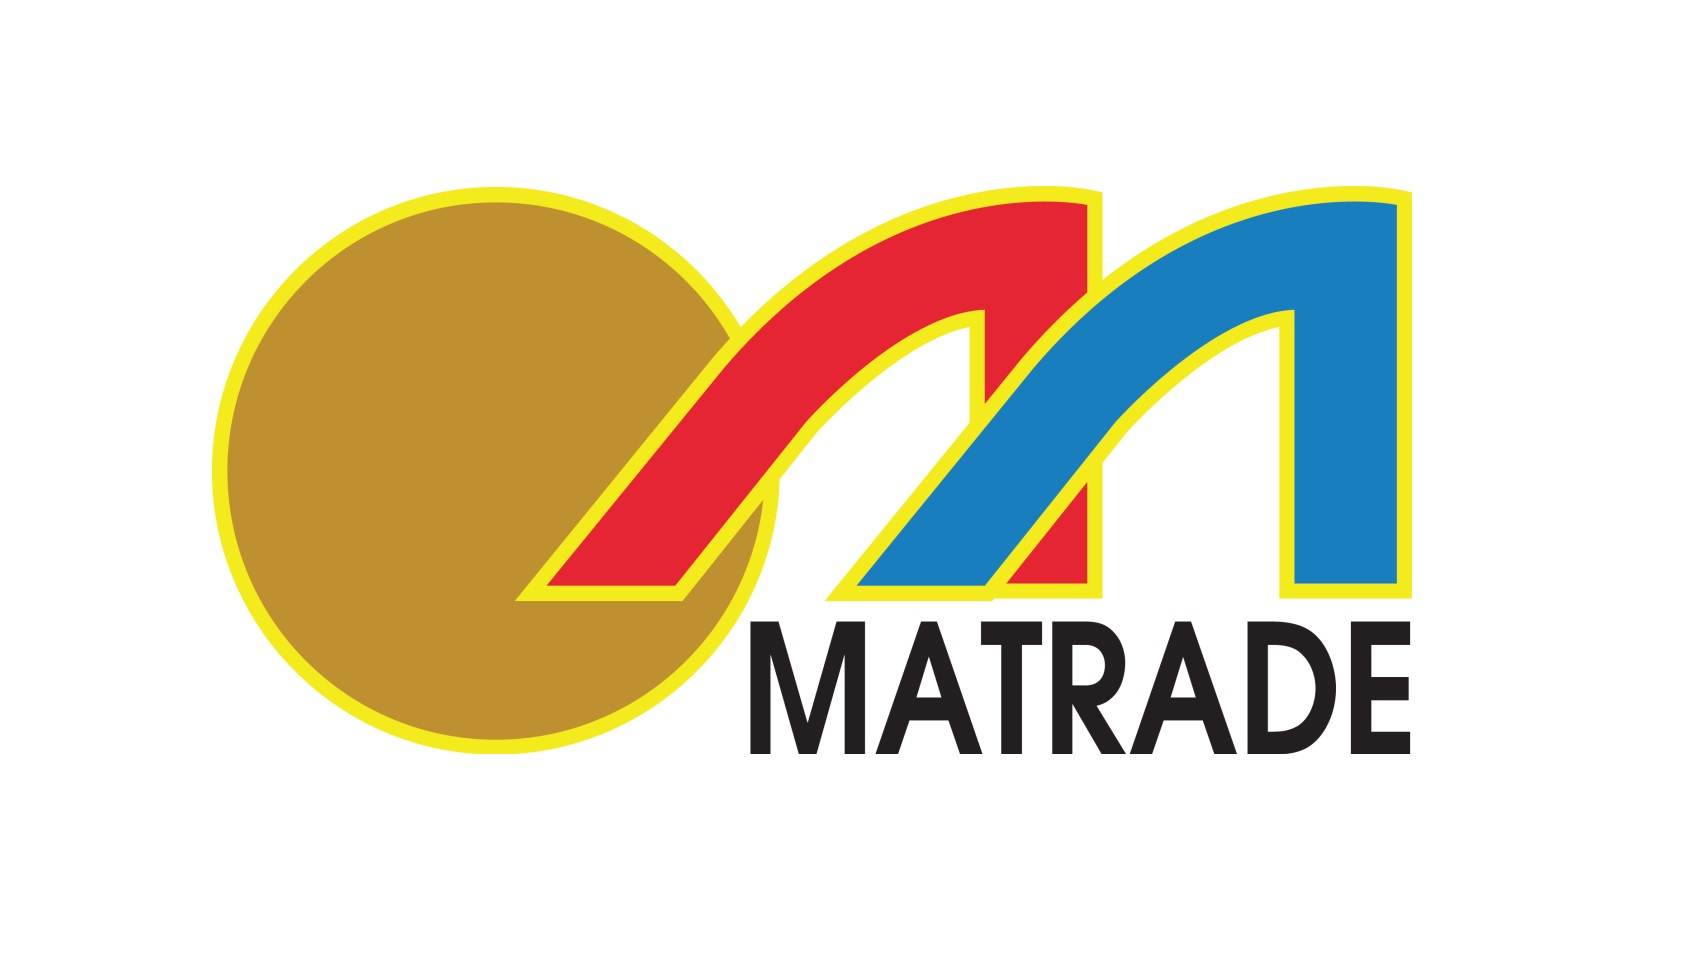 Matrade launches activities aimed at enhancing service exports